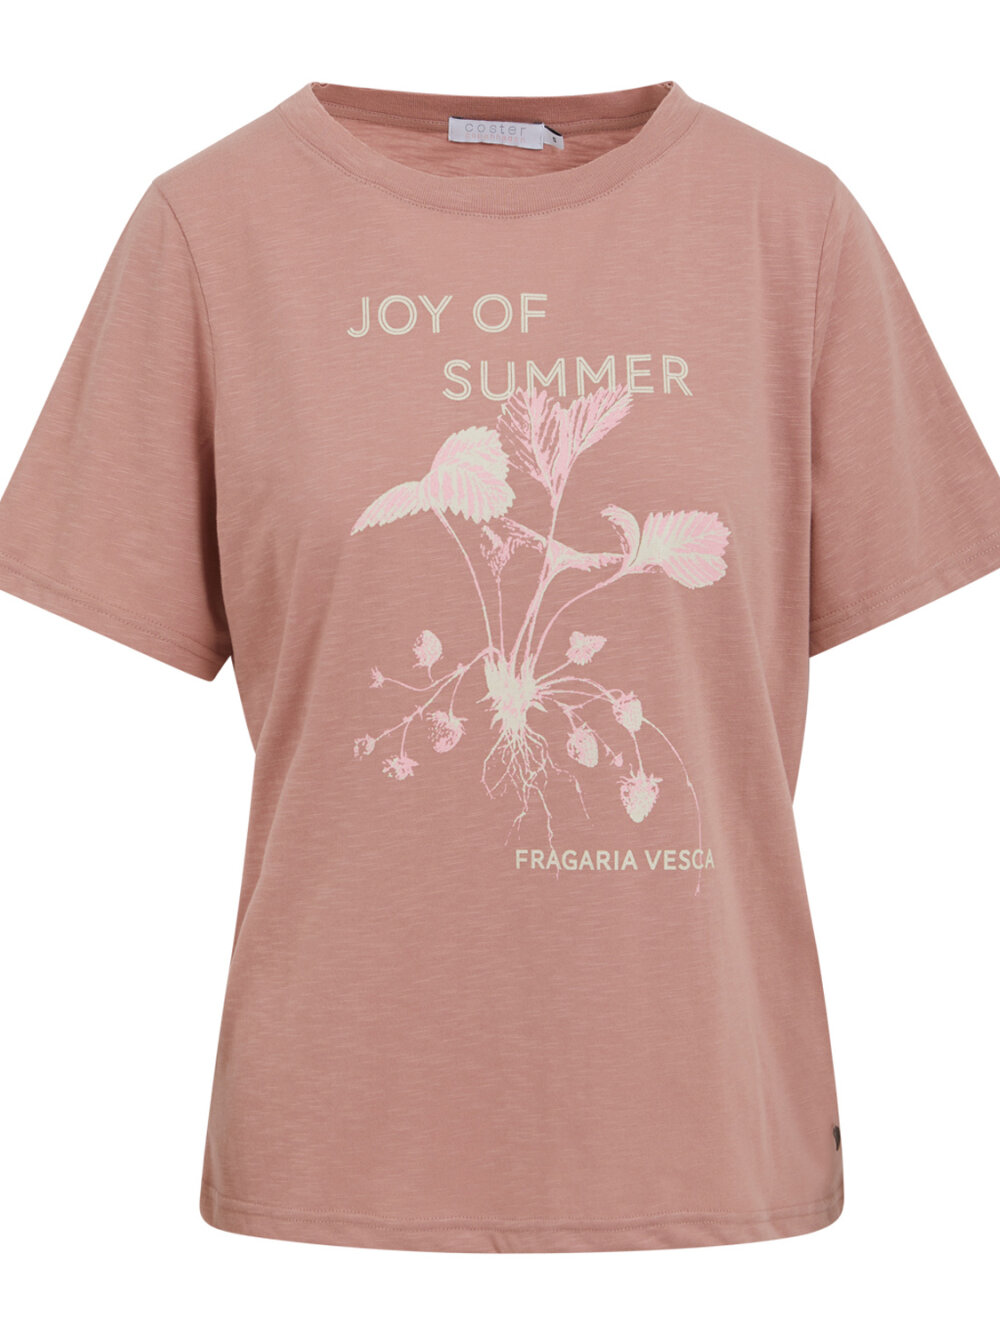 Coster Copenhagen - T-shirt with Joy of summer pri